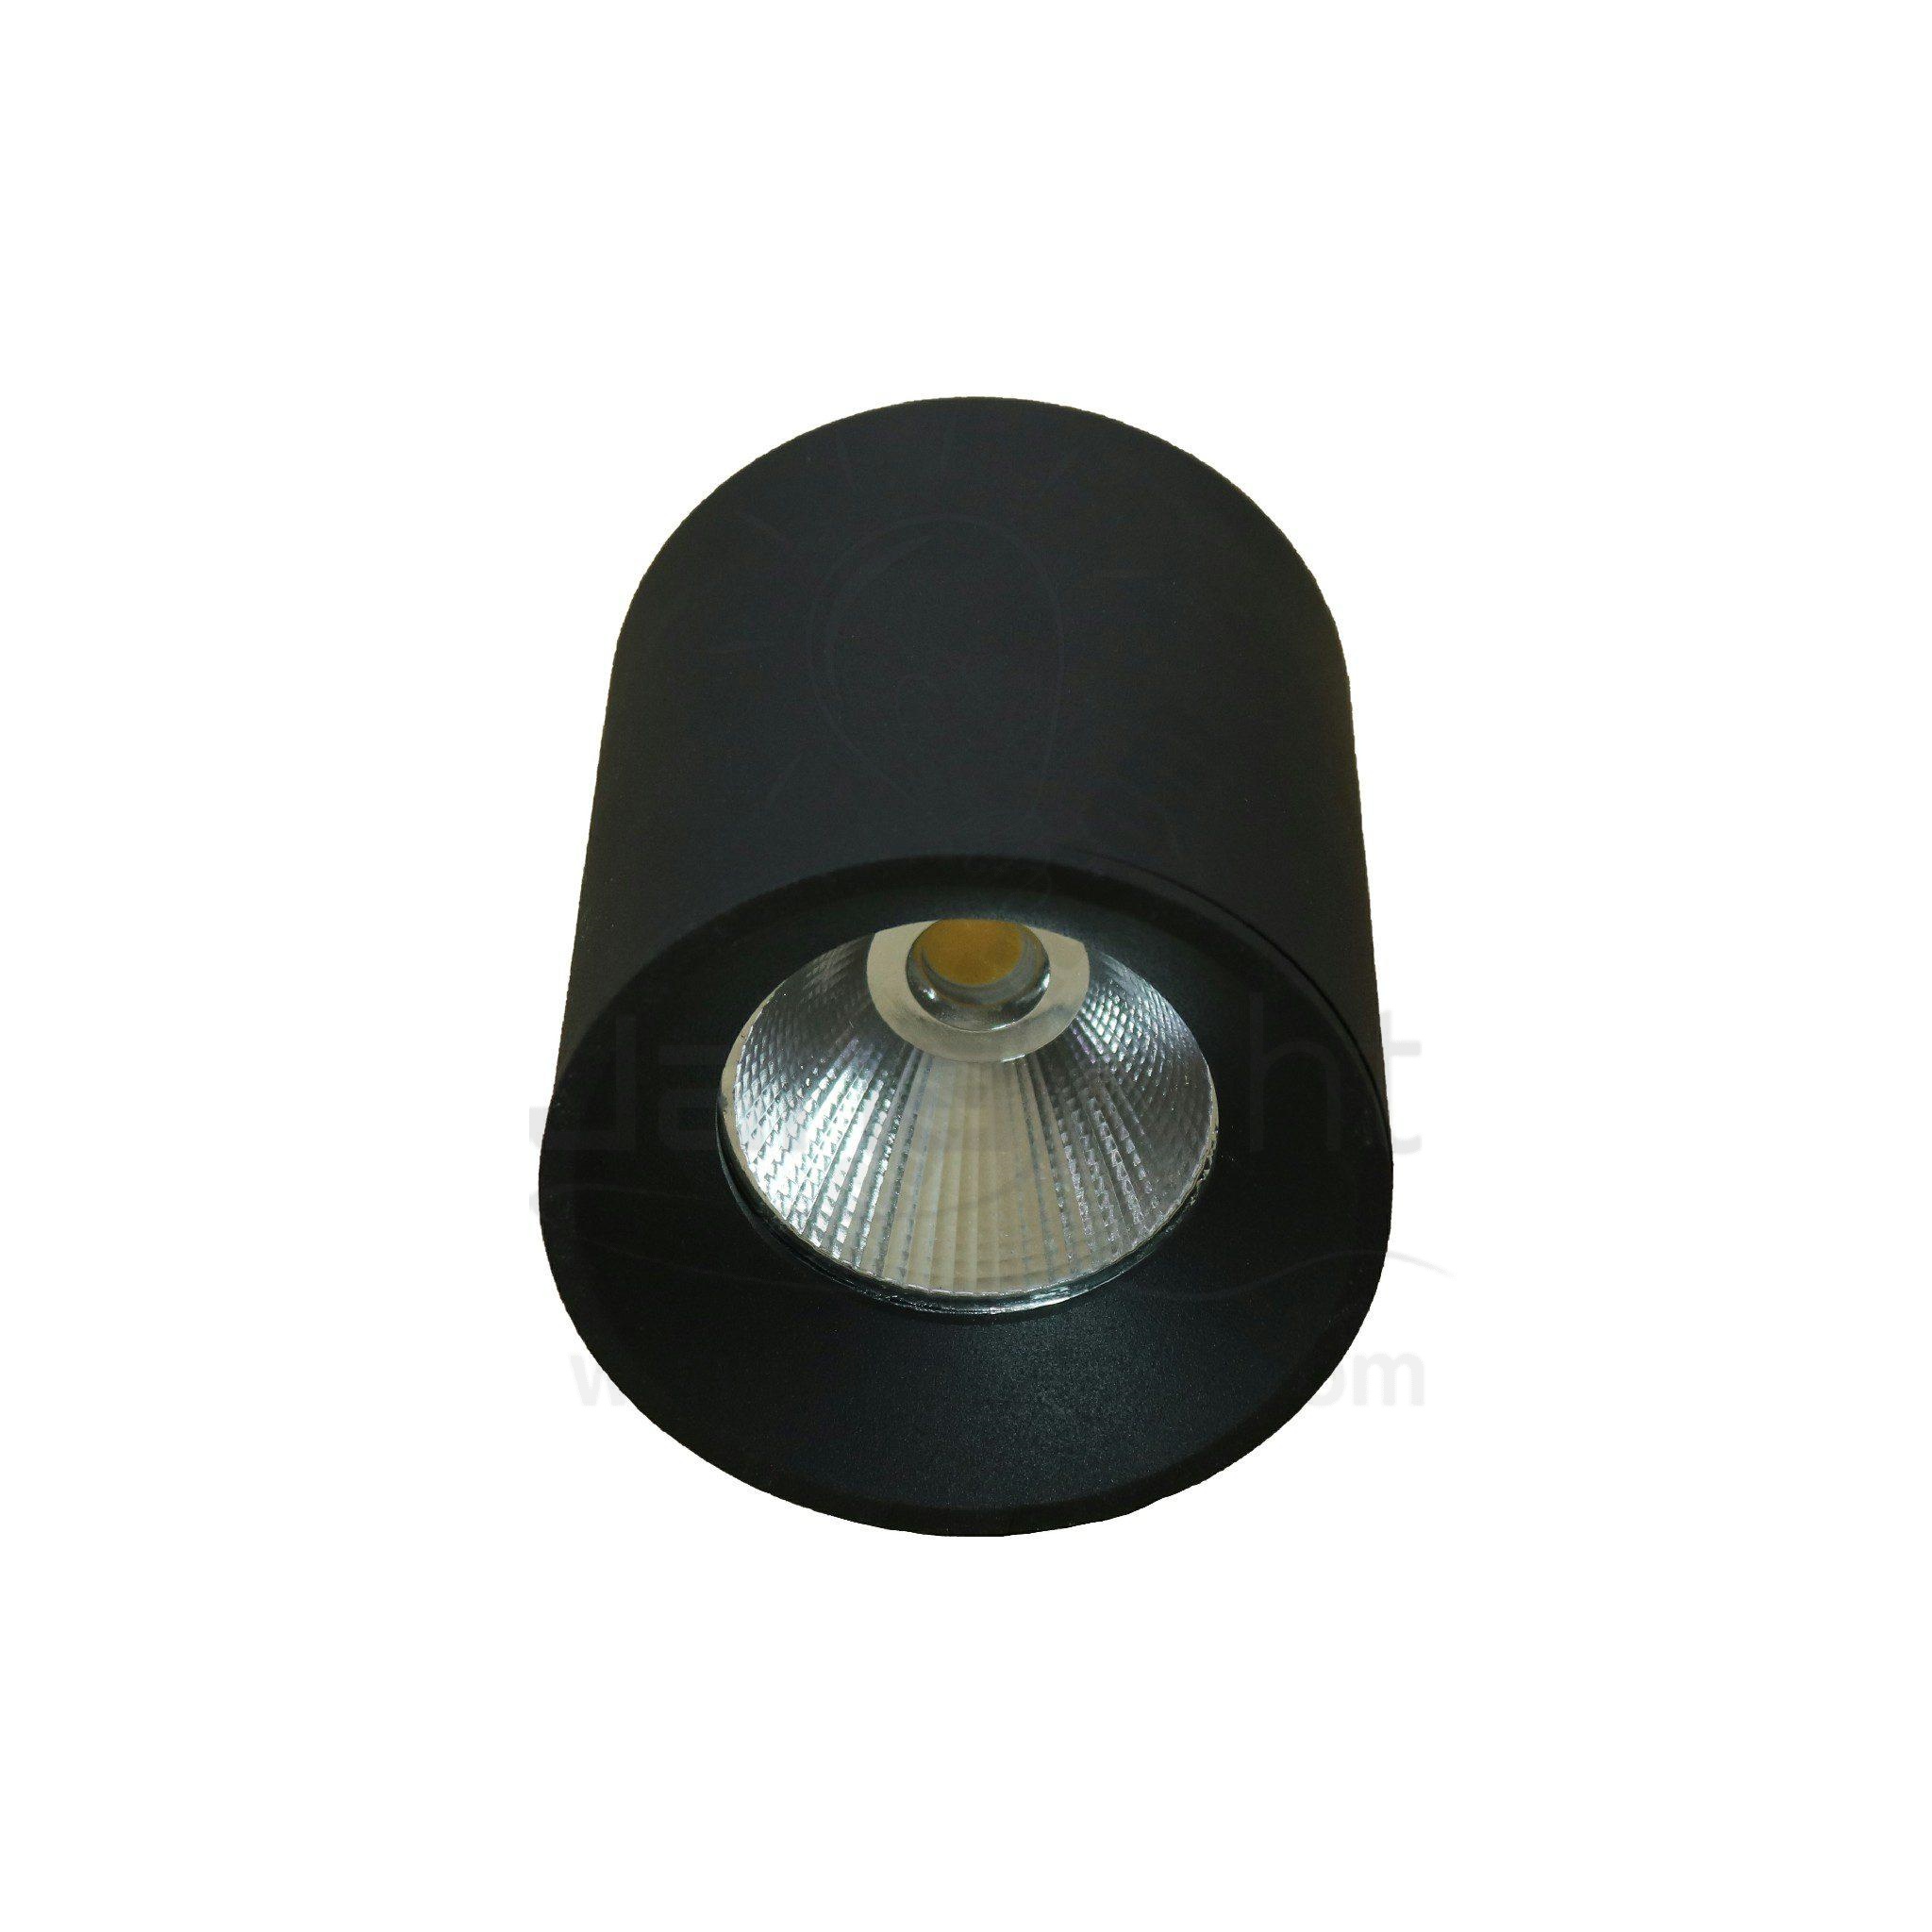 سبوت لايت سلندر 10 وات مدور اسود خارجي COB ايميكا black round cylinder spotlight prominent 10 watt emeca COB